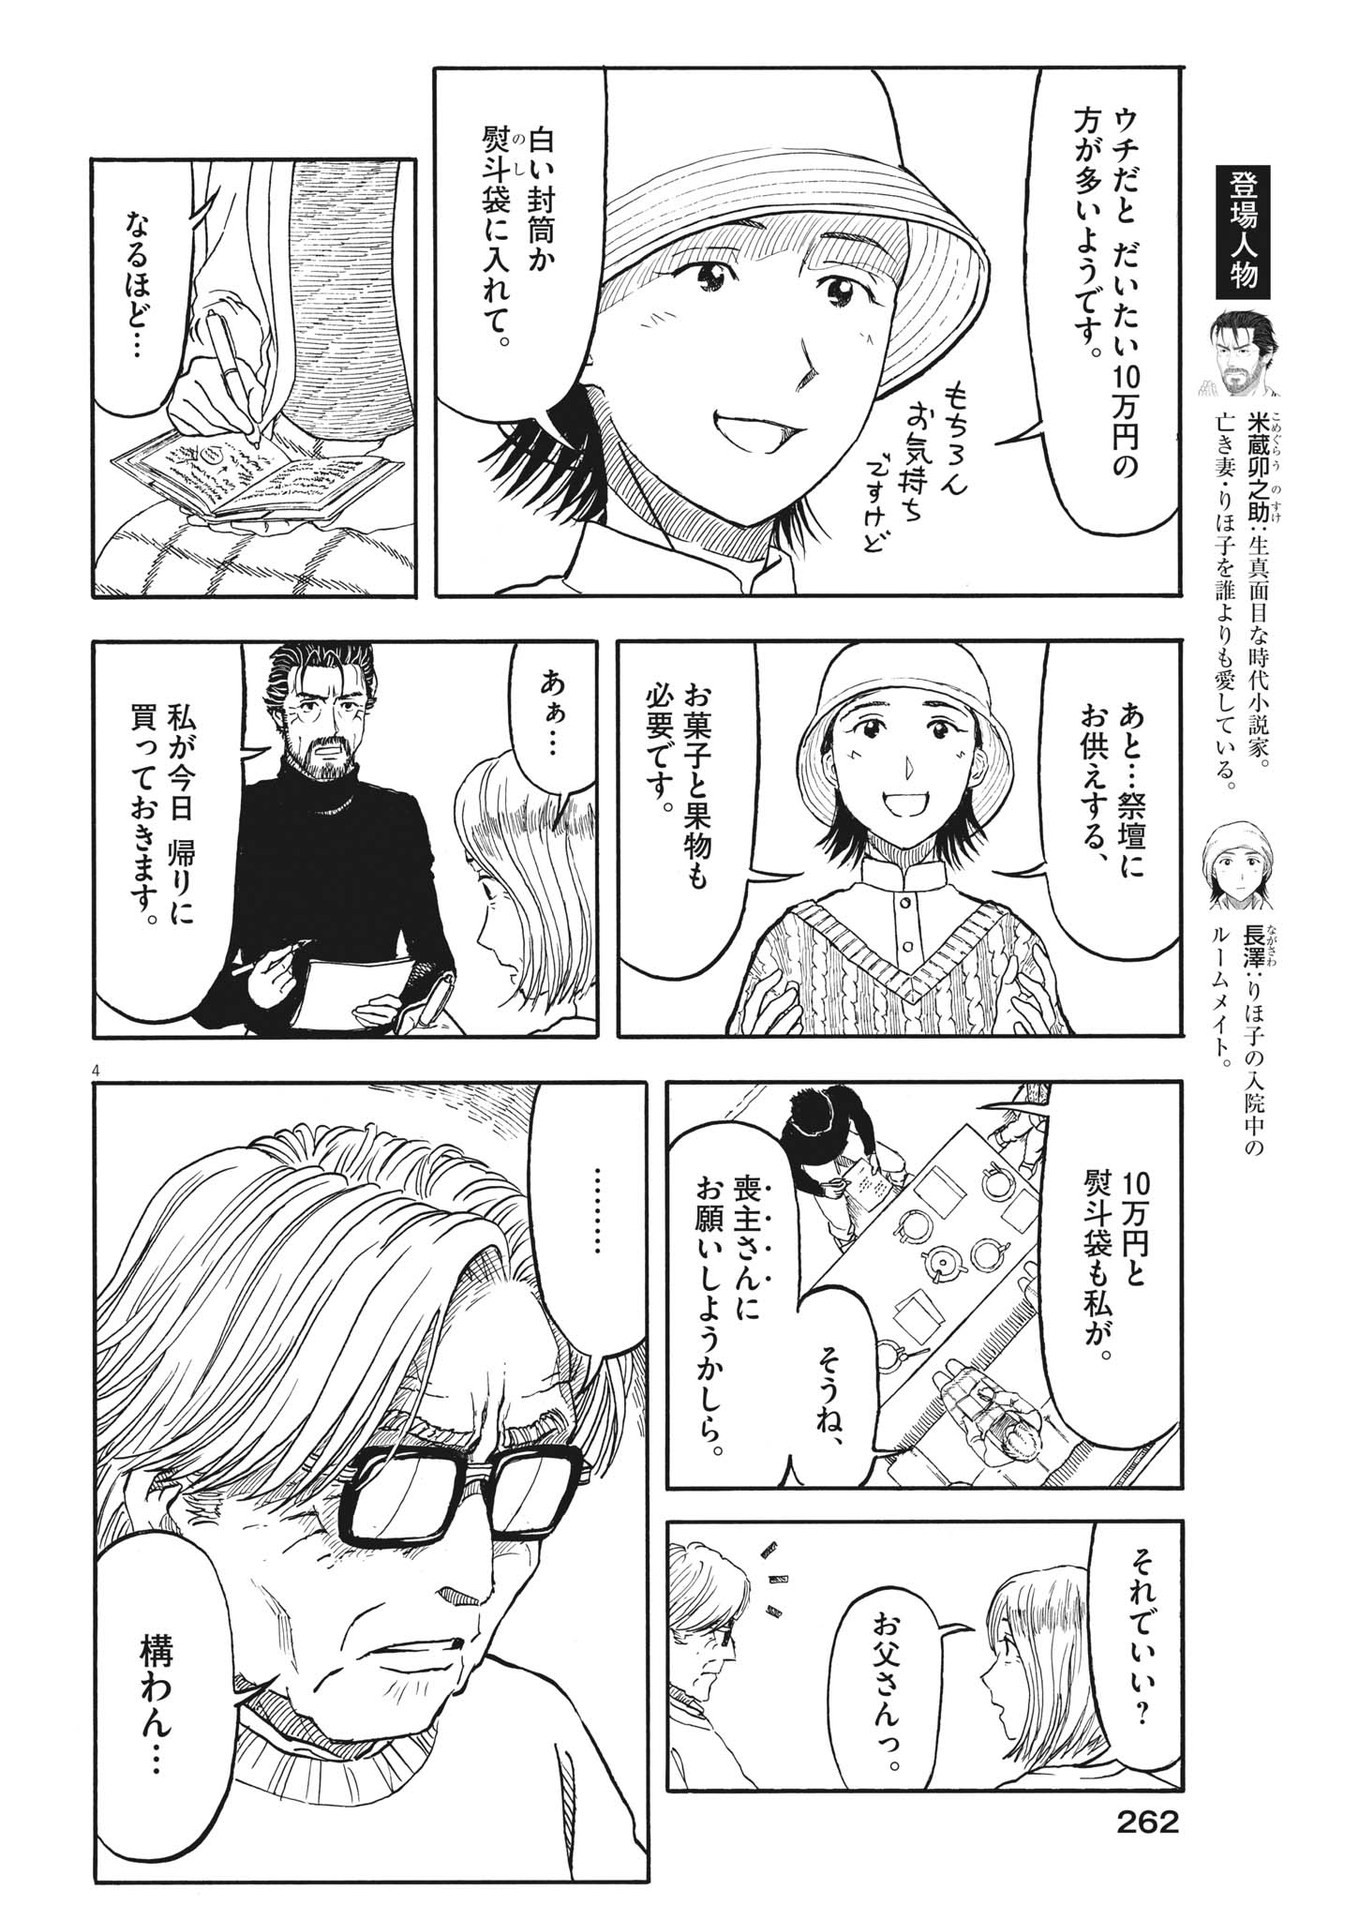 Komegura Fuufu no Recipe-chou - Chapter 28 - Page 4